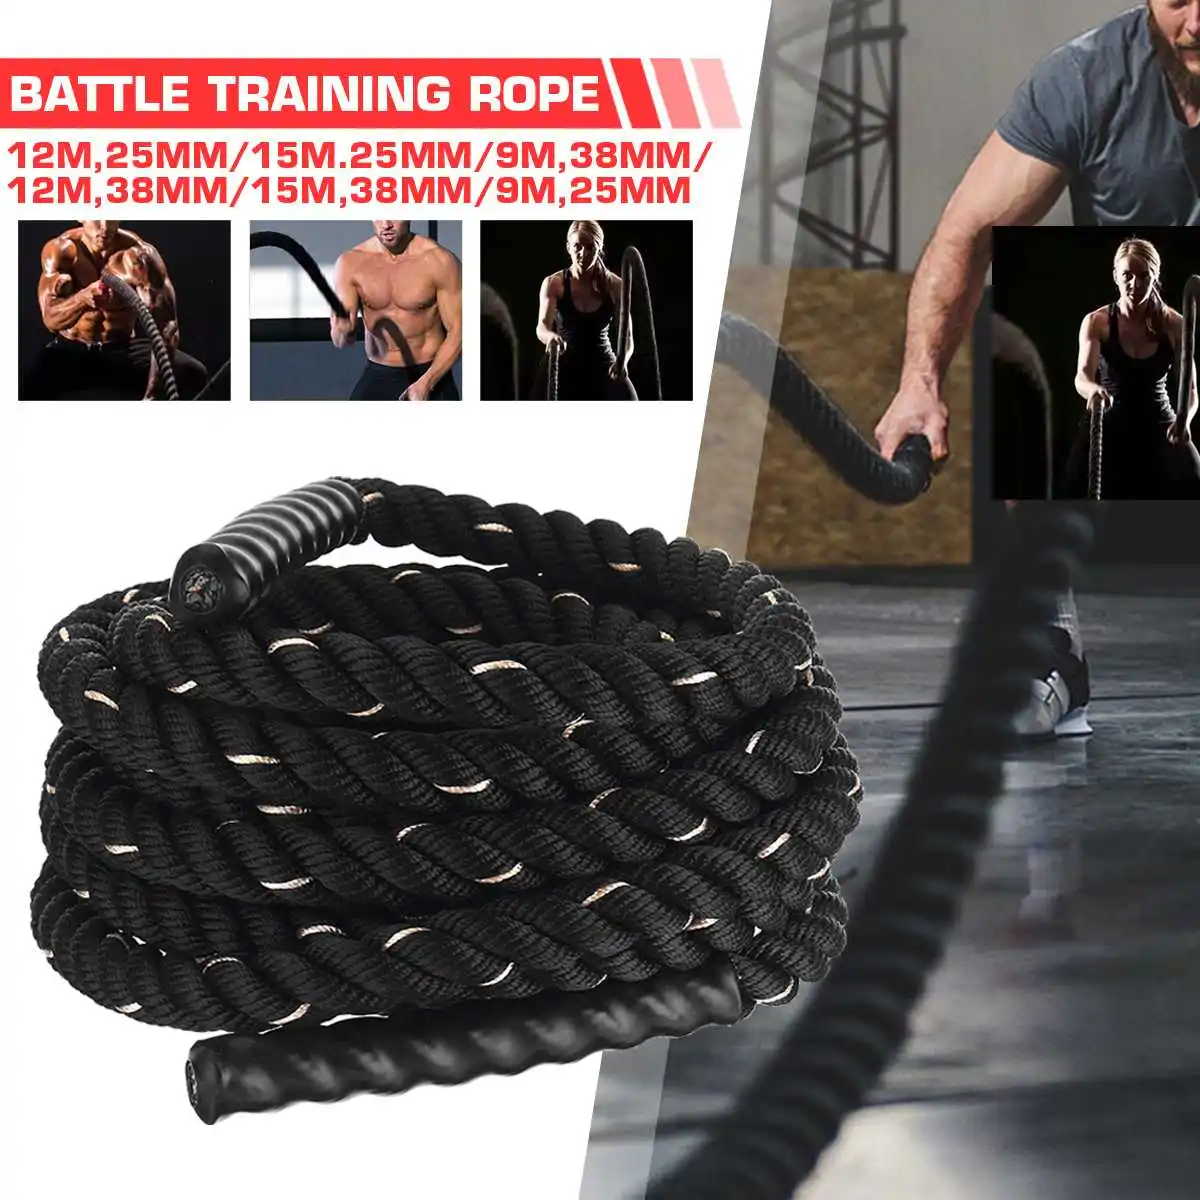 38mmx9m 12m 15m Battle Power Rope Strength Muscle Training Fitness Gym Full Body Workout Men Women Power Training Strength